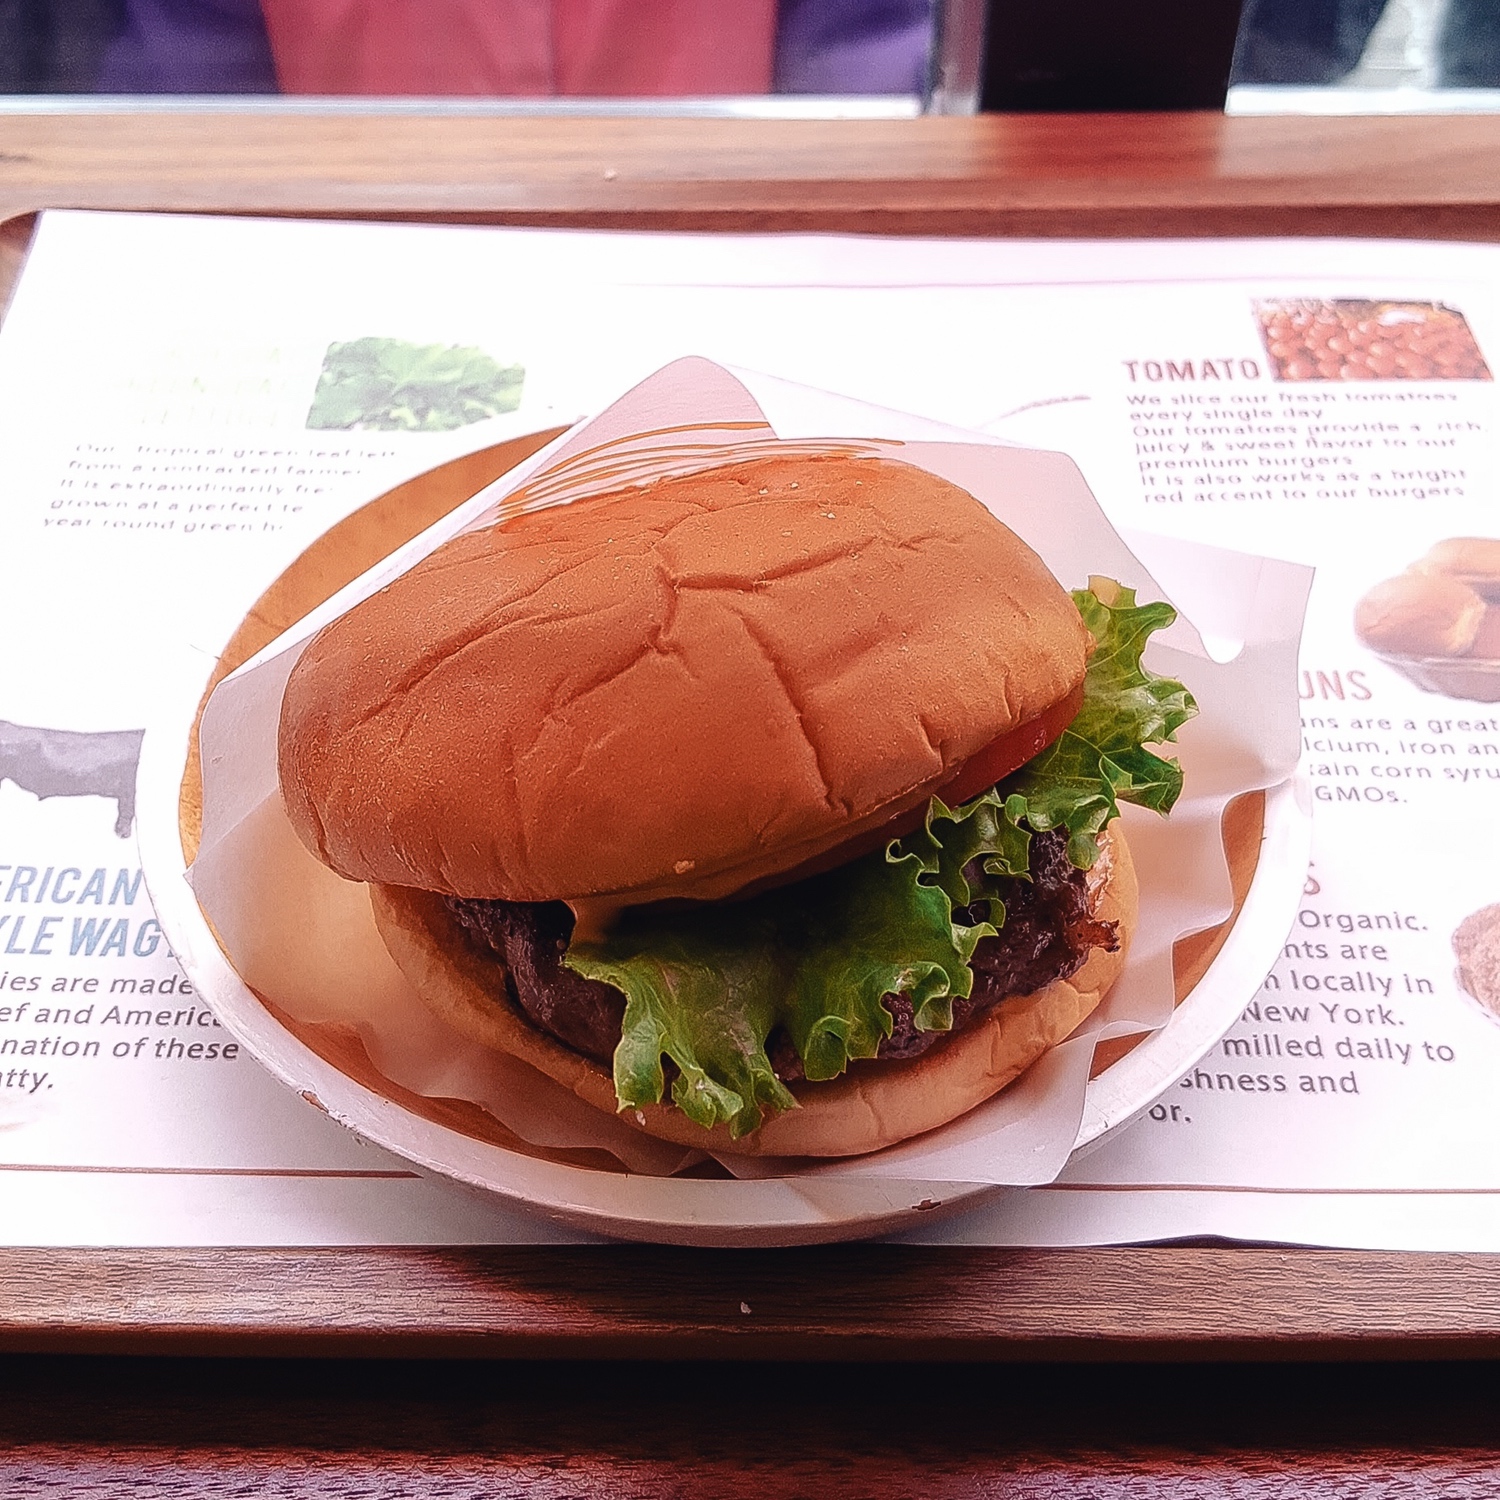 Union Square Burger